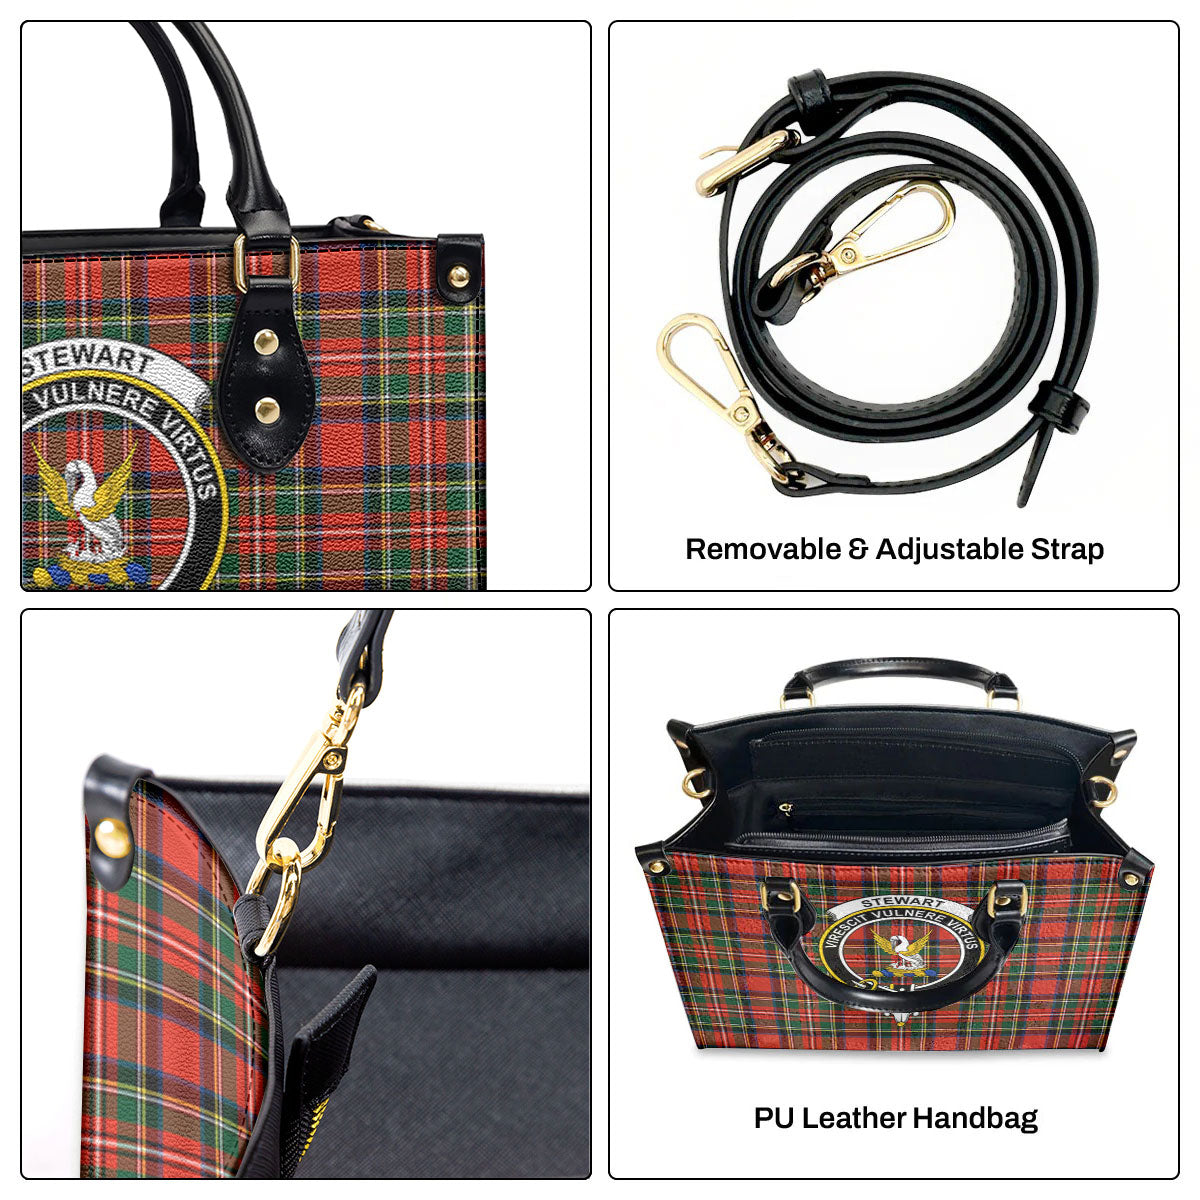 Stewart Royal Modern Tartan Crest Leather Handbag